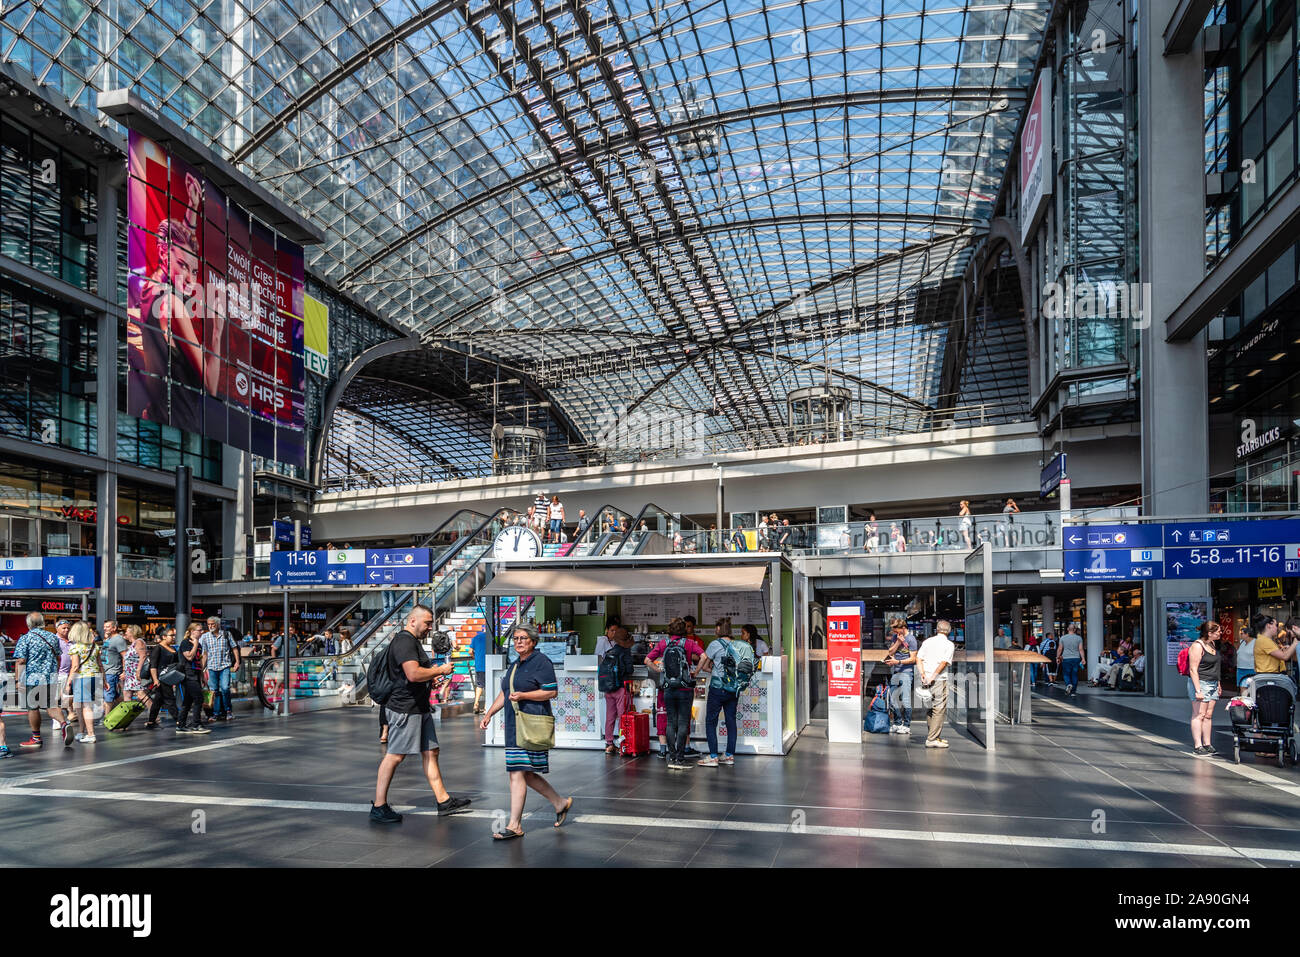 Berlin, Germany - July 28, 2019: Central train station in Berlin. Berlin - Hauptbahnhof. Modern glass architecture Stock Photo